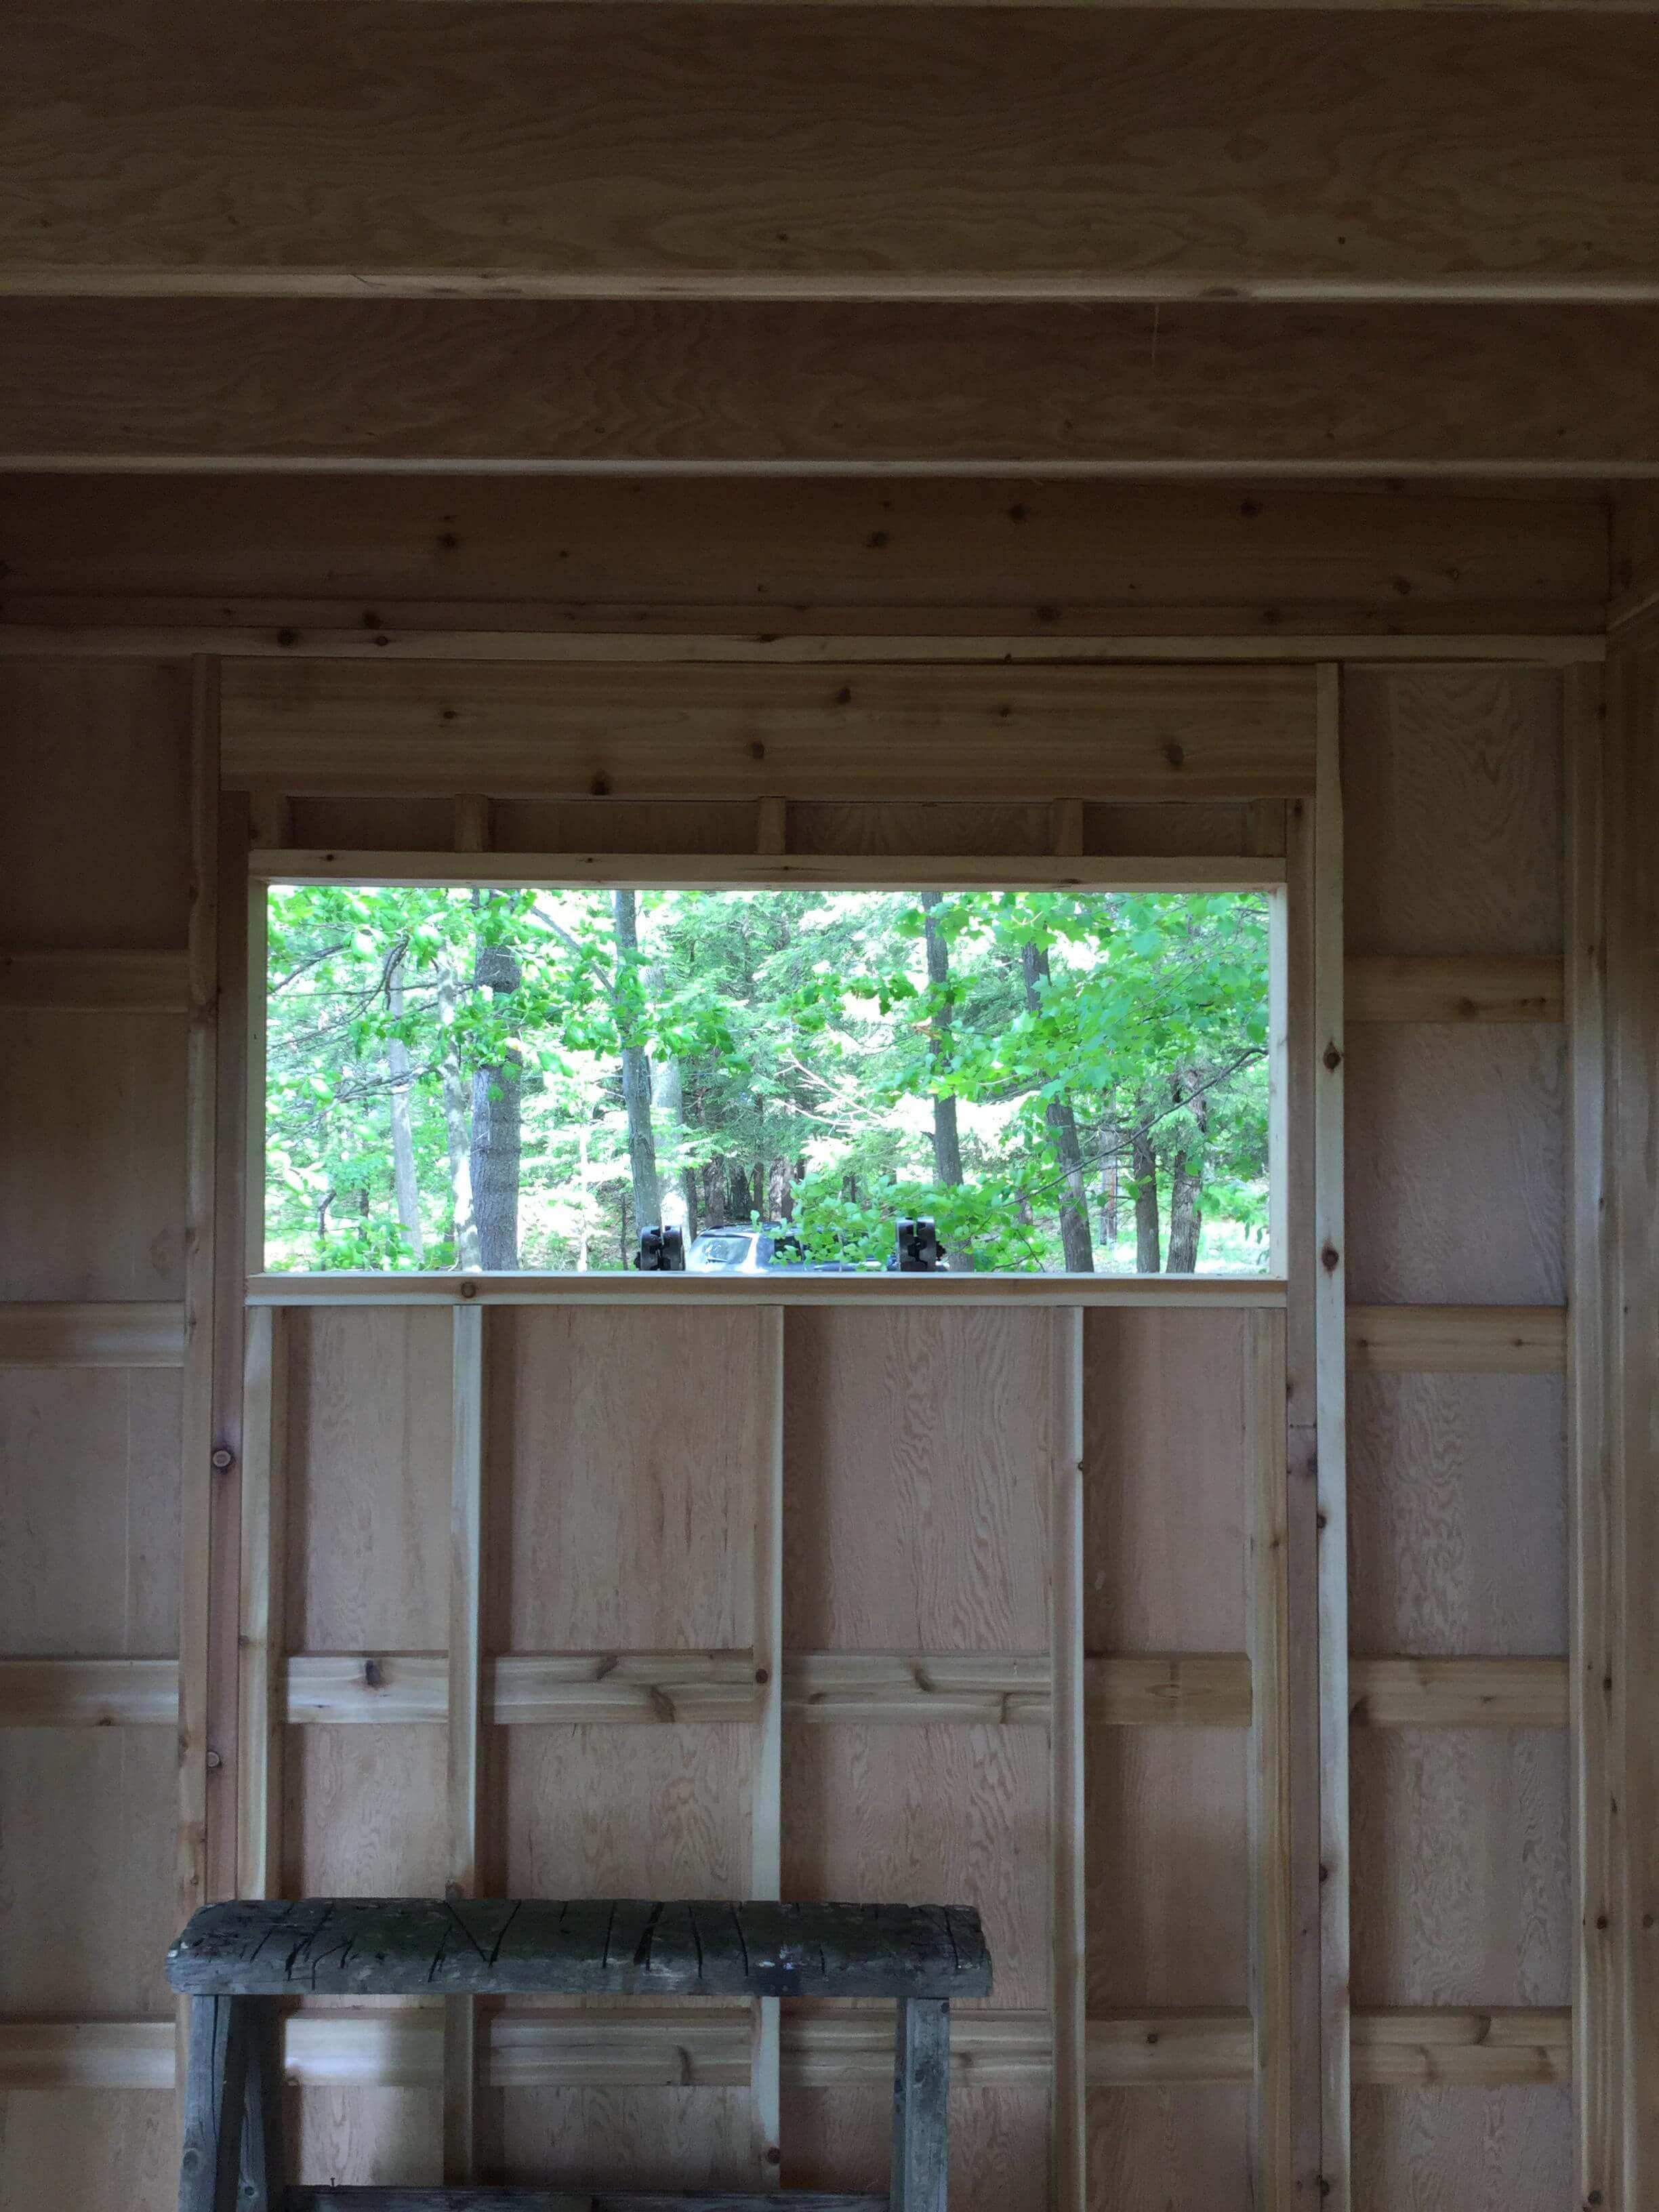 Verana home studio 8x13 with Large Horizontal Sliding Window in MacTier Ontario. ID number 191578-5.